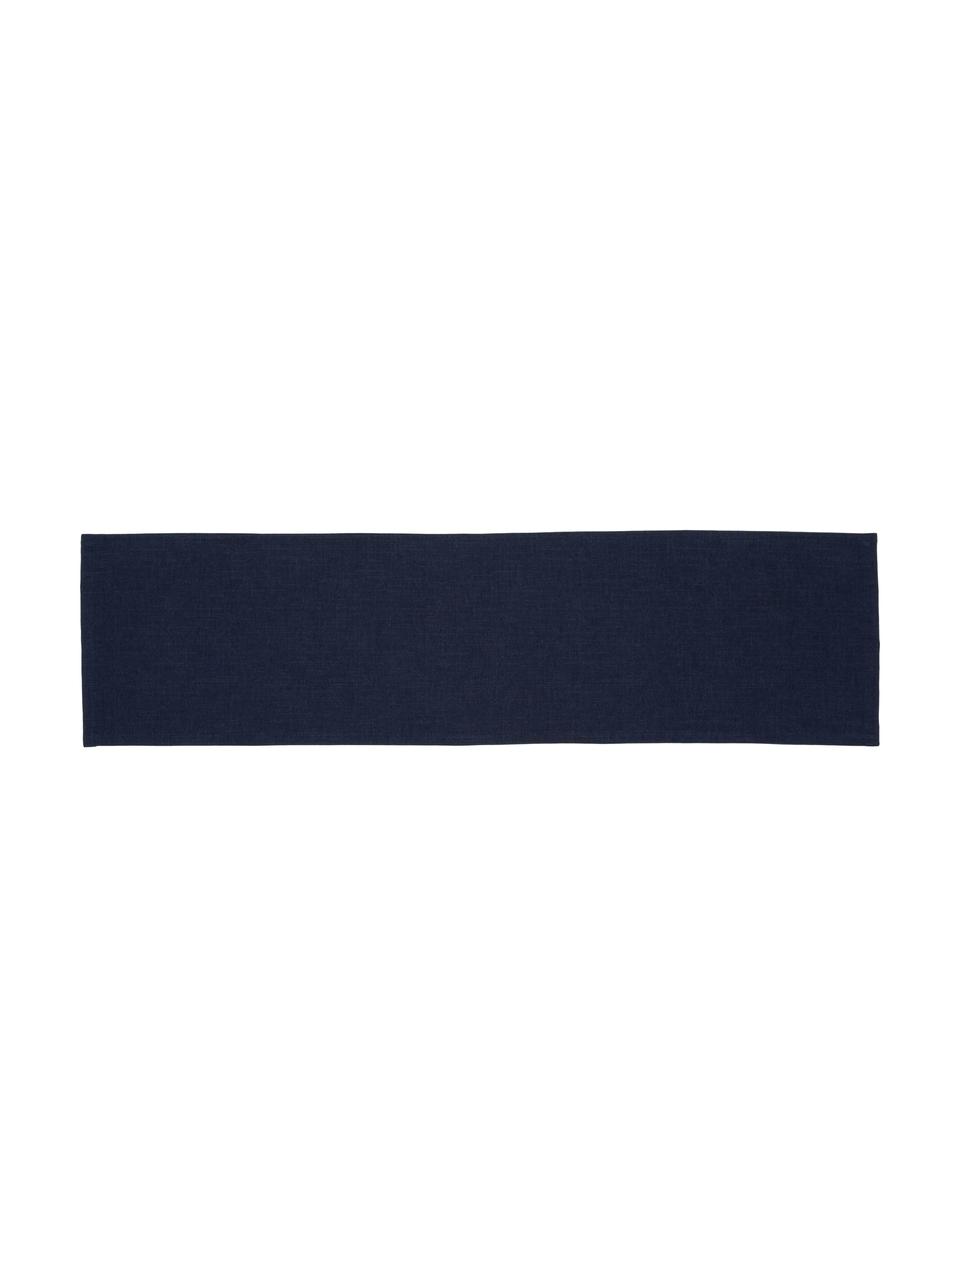 Chemin de table bleu Riva, 55 % coton, 45 % polyester, Bleu foncé, larg. 40 x long. 150 cm